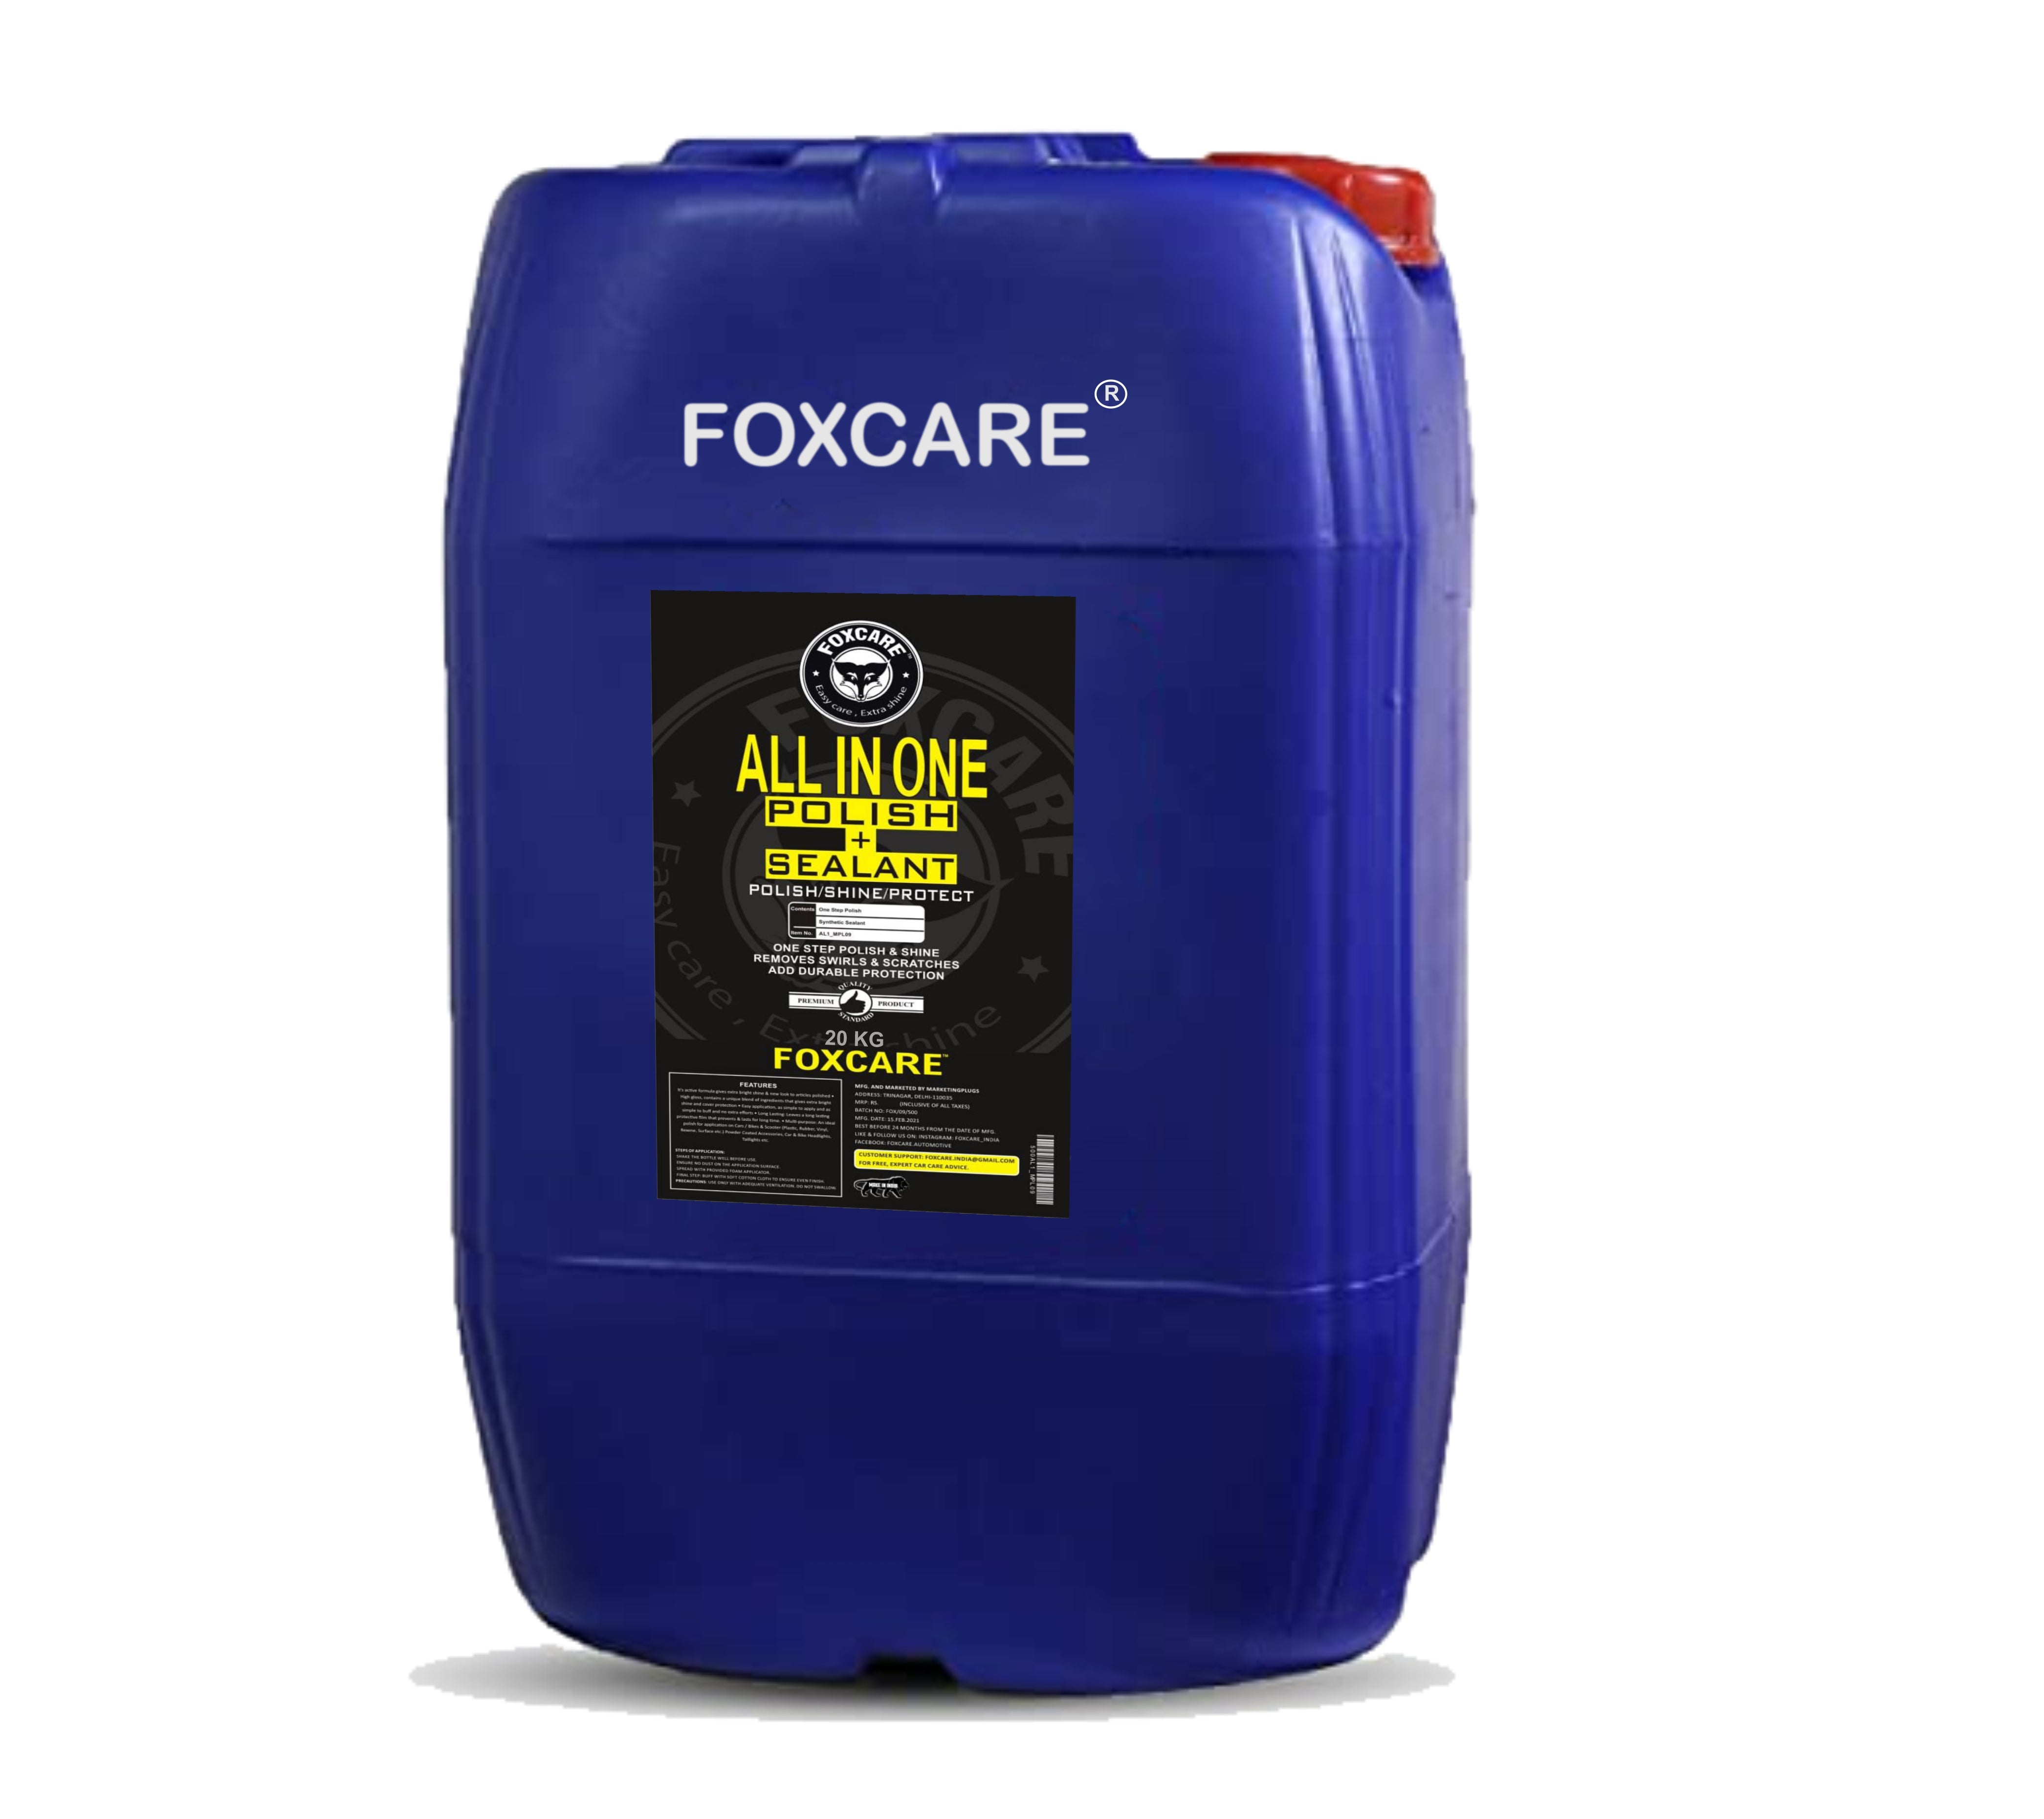 Foxcare All in One Polish + Sealant, Multipurpose Polish (20 KG)